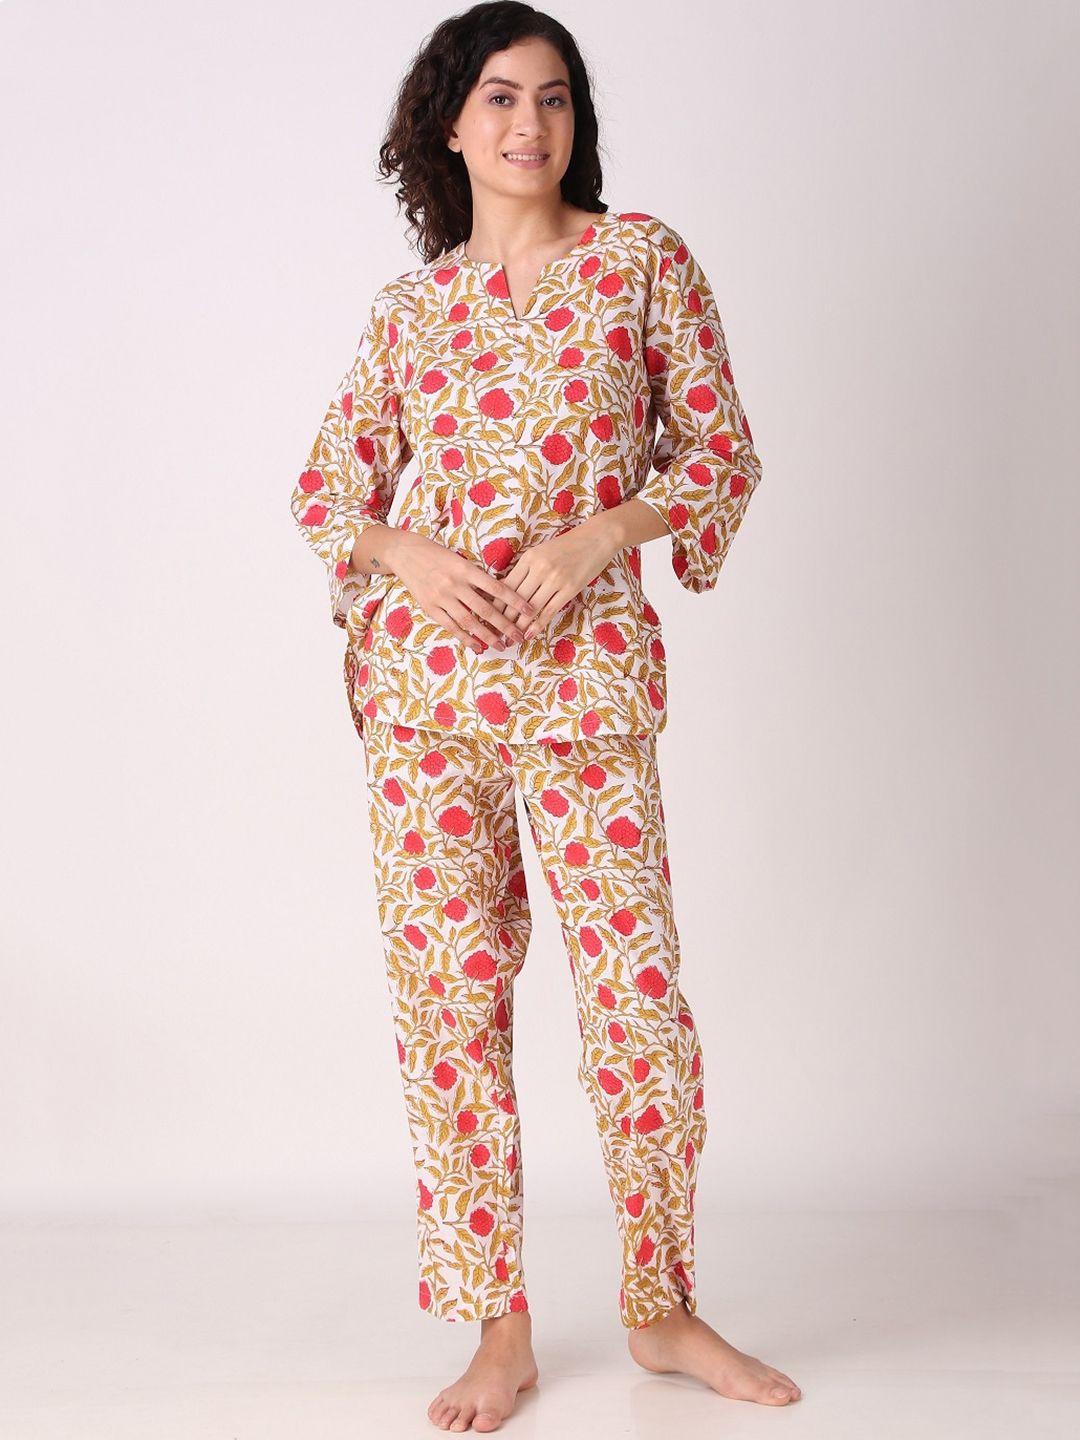 masha floral printed pure cotton top with pyjamas